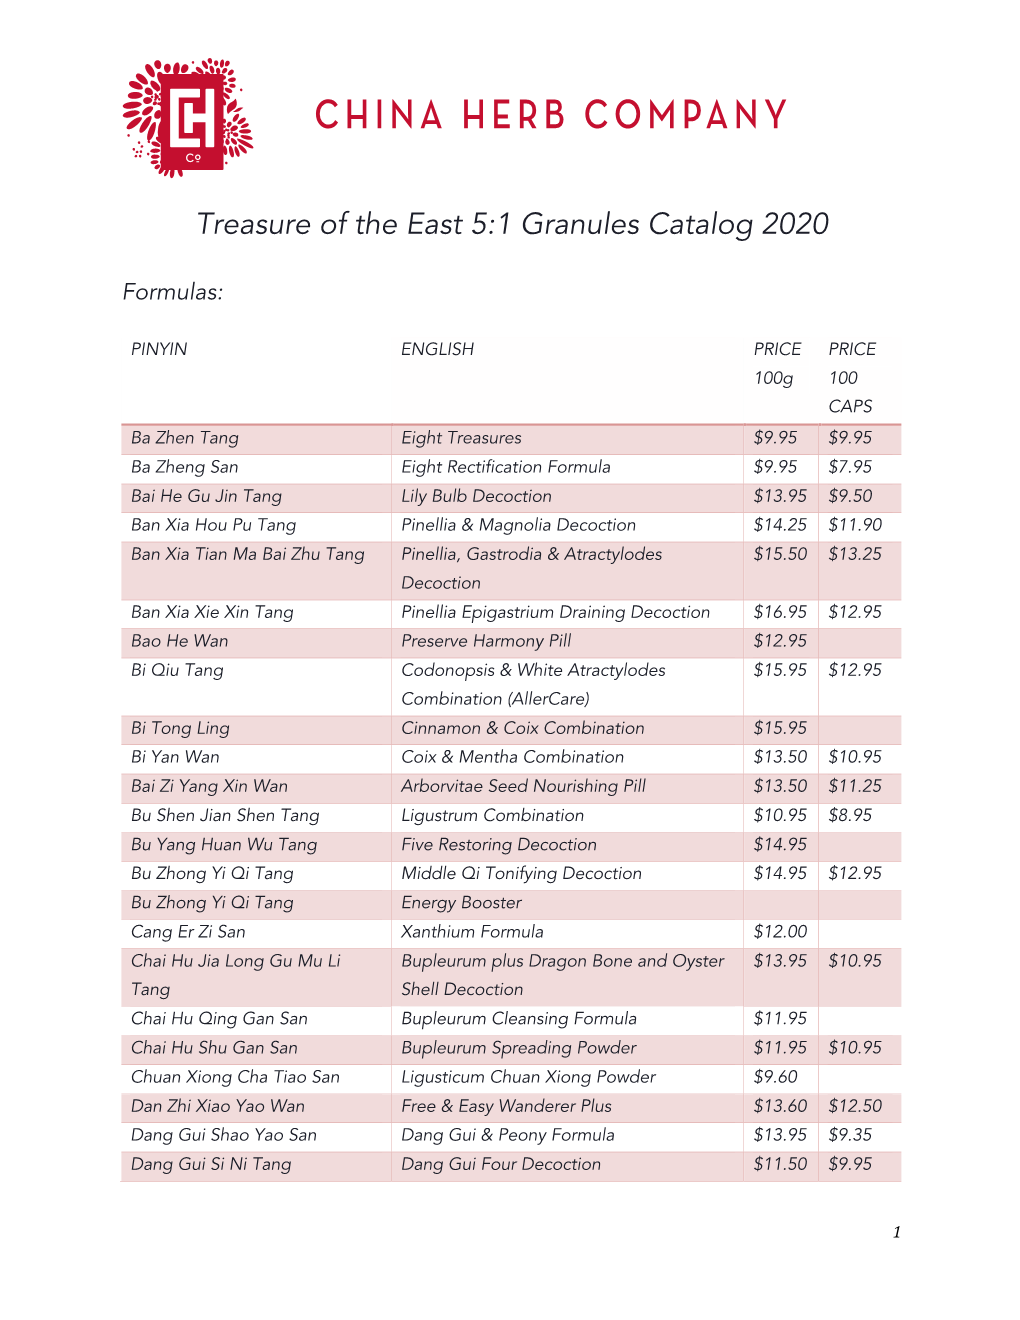 CHC Treasure of the East Rx Catalog 2020